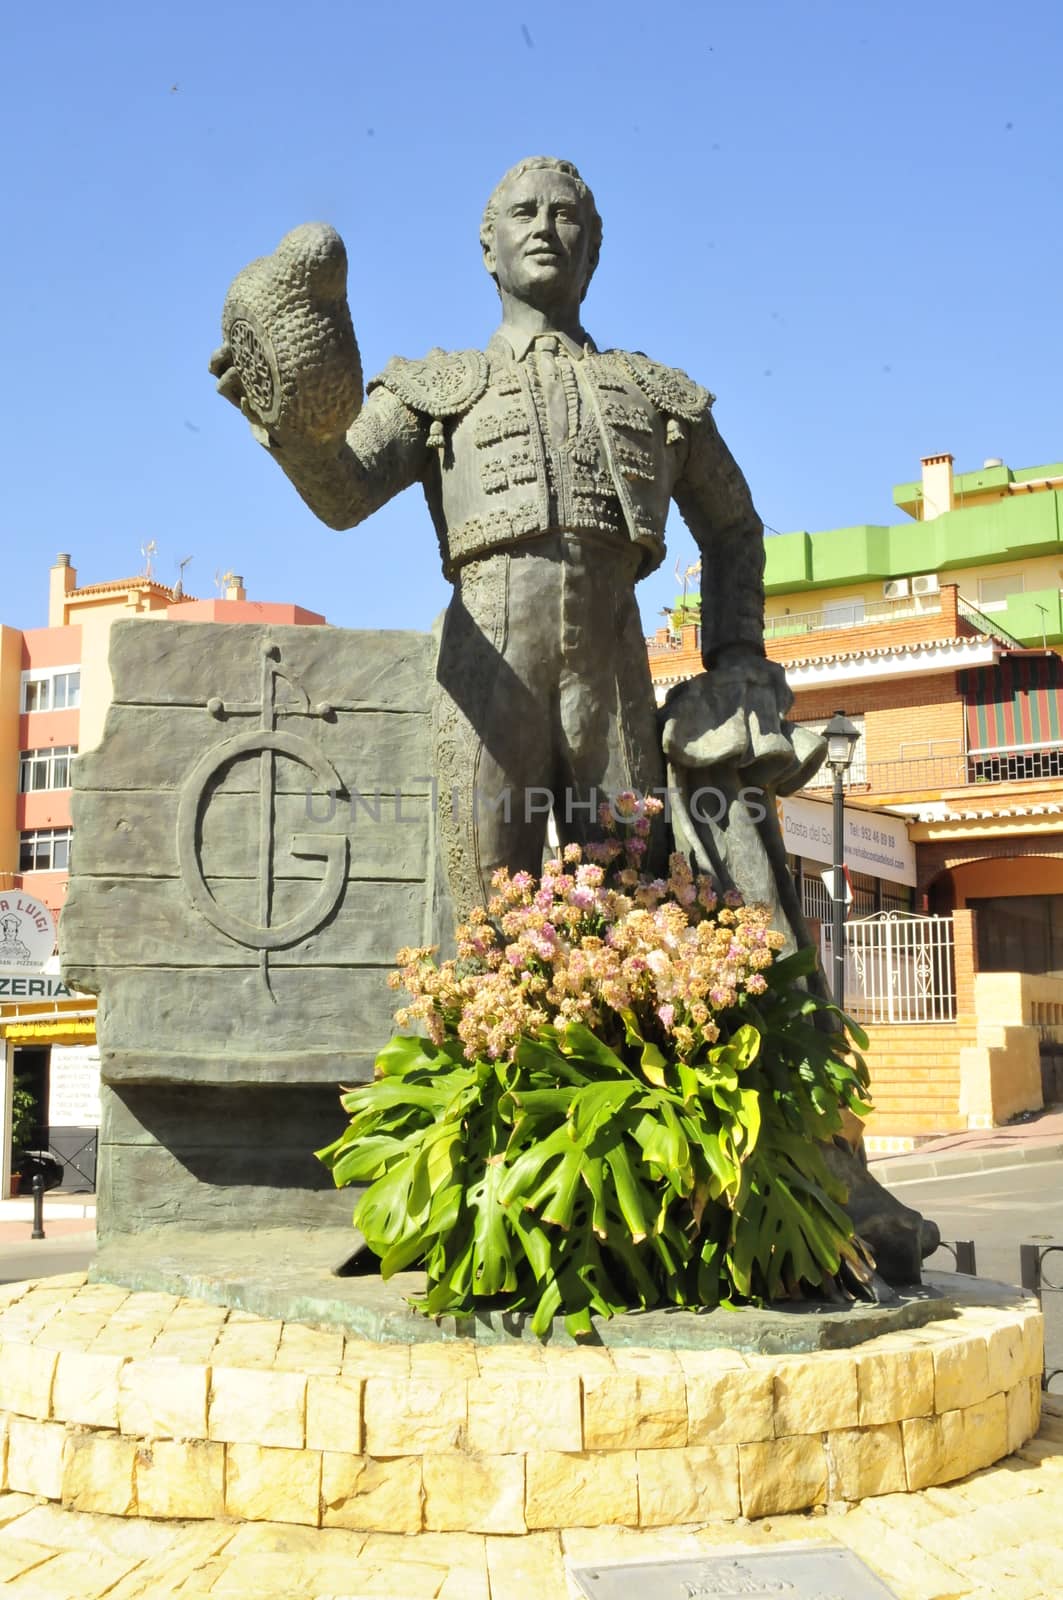 Matador statue by gorilla